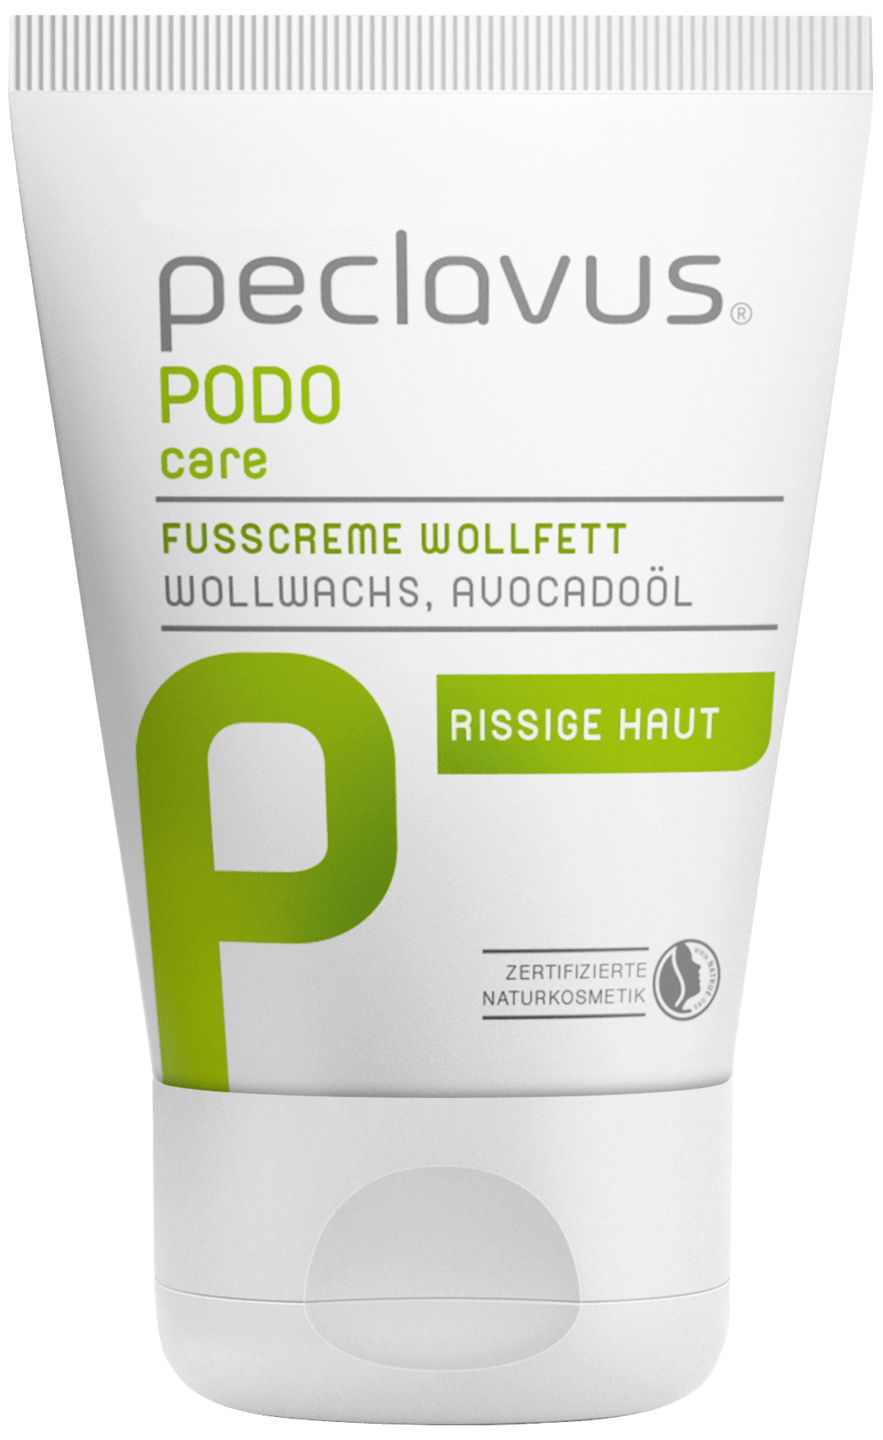 peclavus - Fußcreme Wollfett, 30 ml